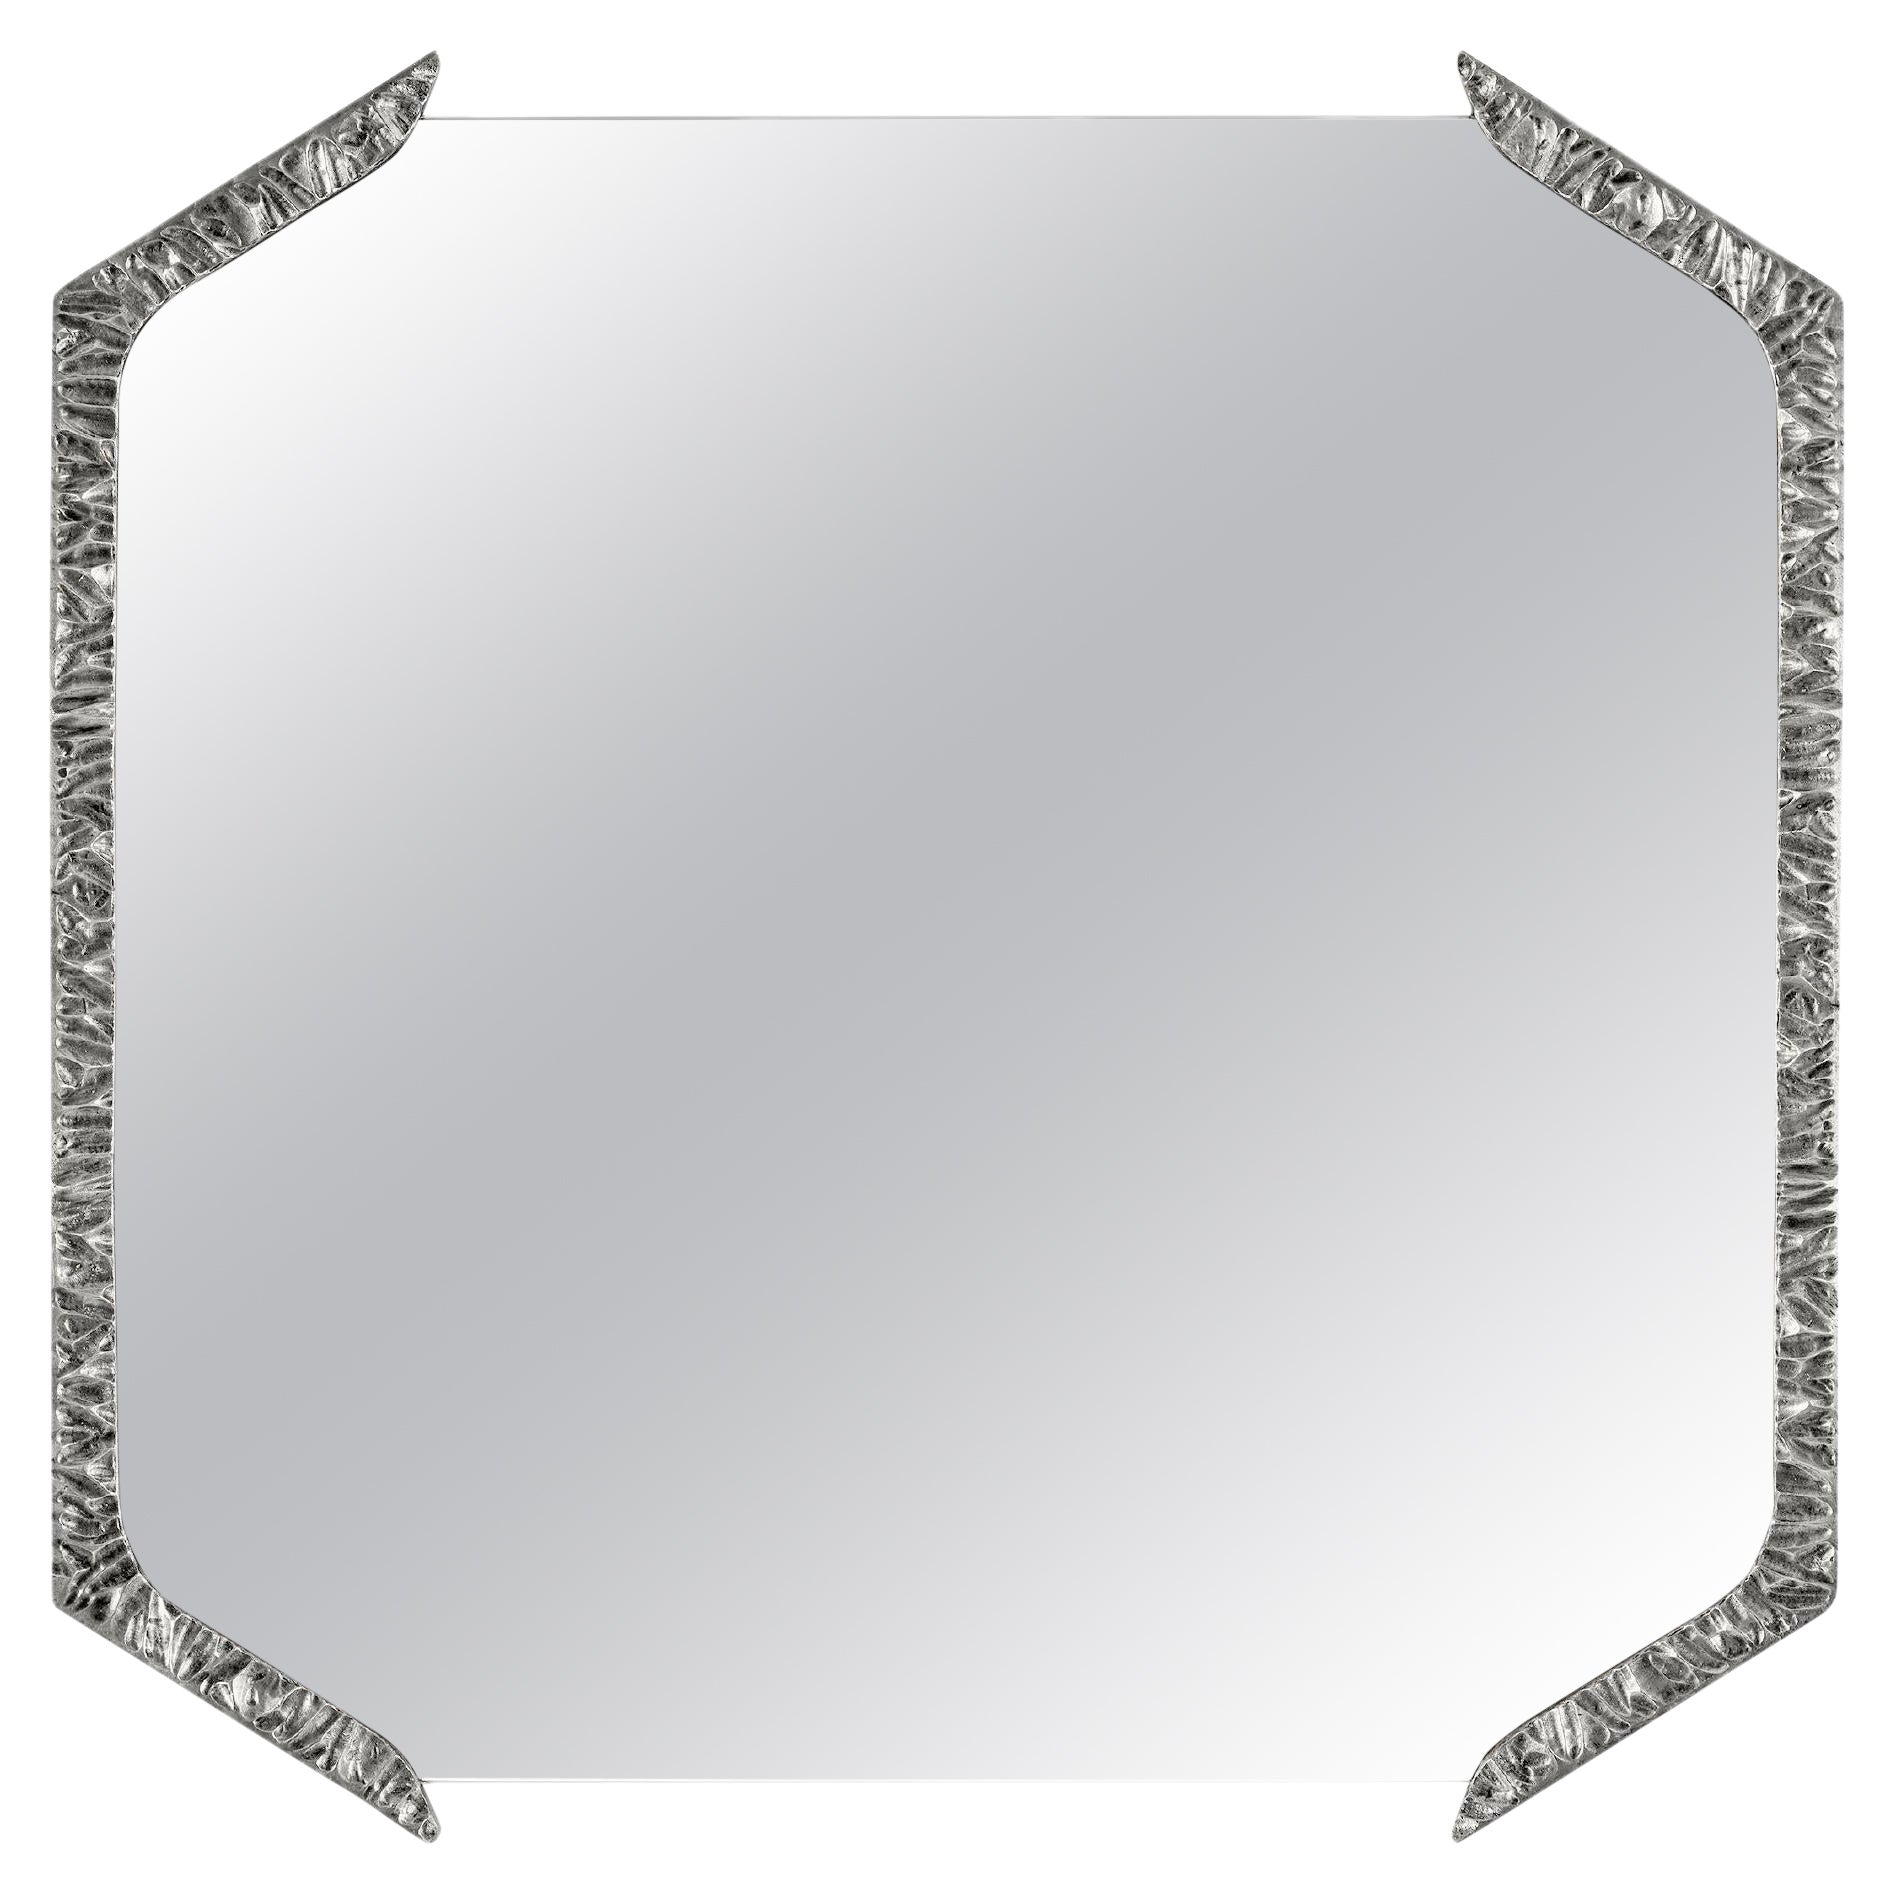 Alentejo Nickel Square Mirror by InsidherLand